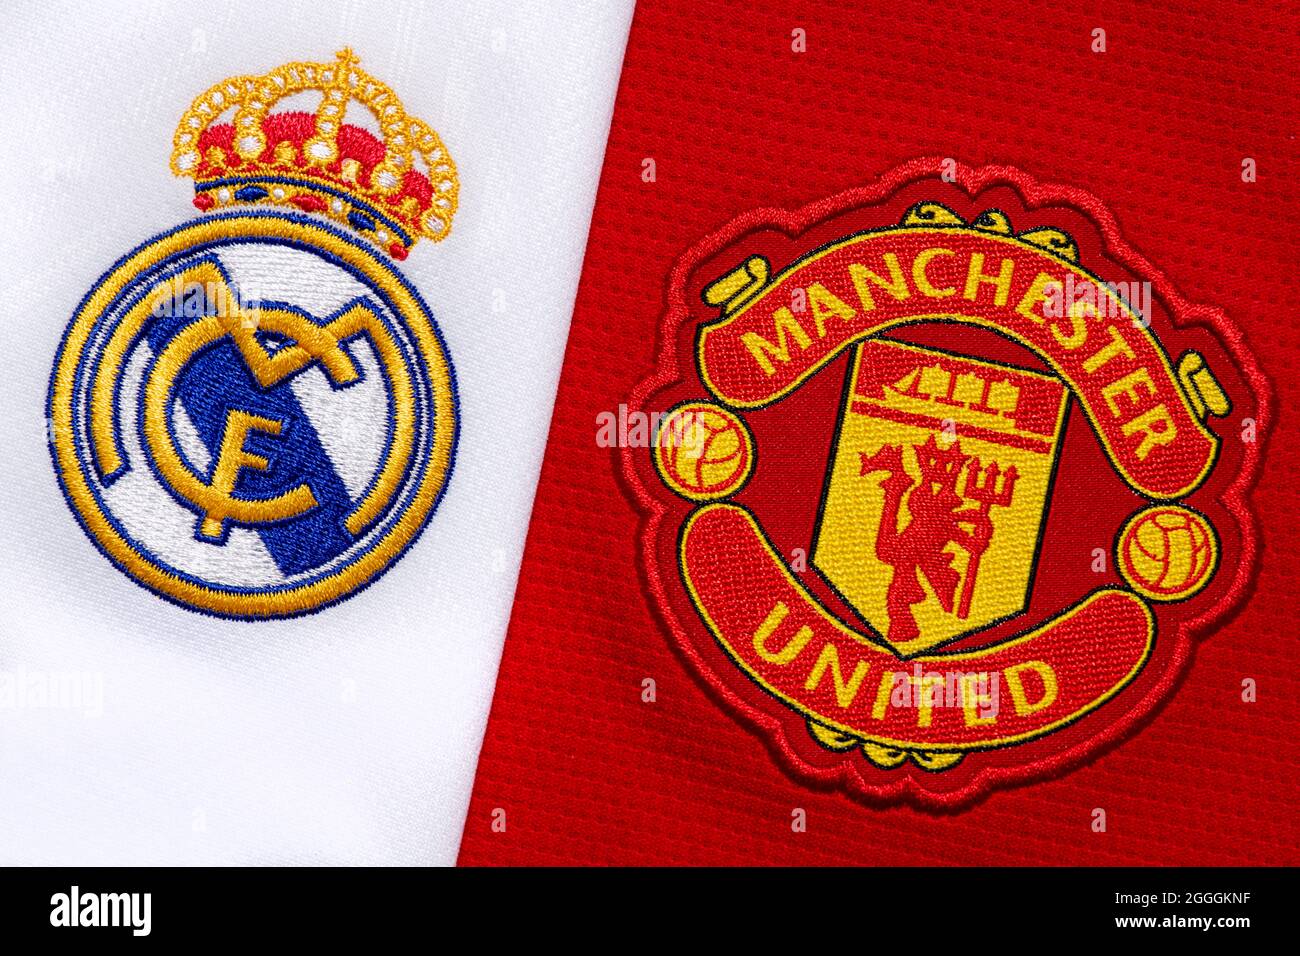 Nahaufnahme des Manchester United & Real Madrid Vereinswappens. Stockfoto